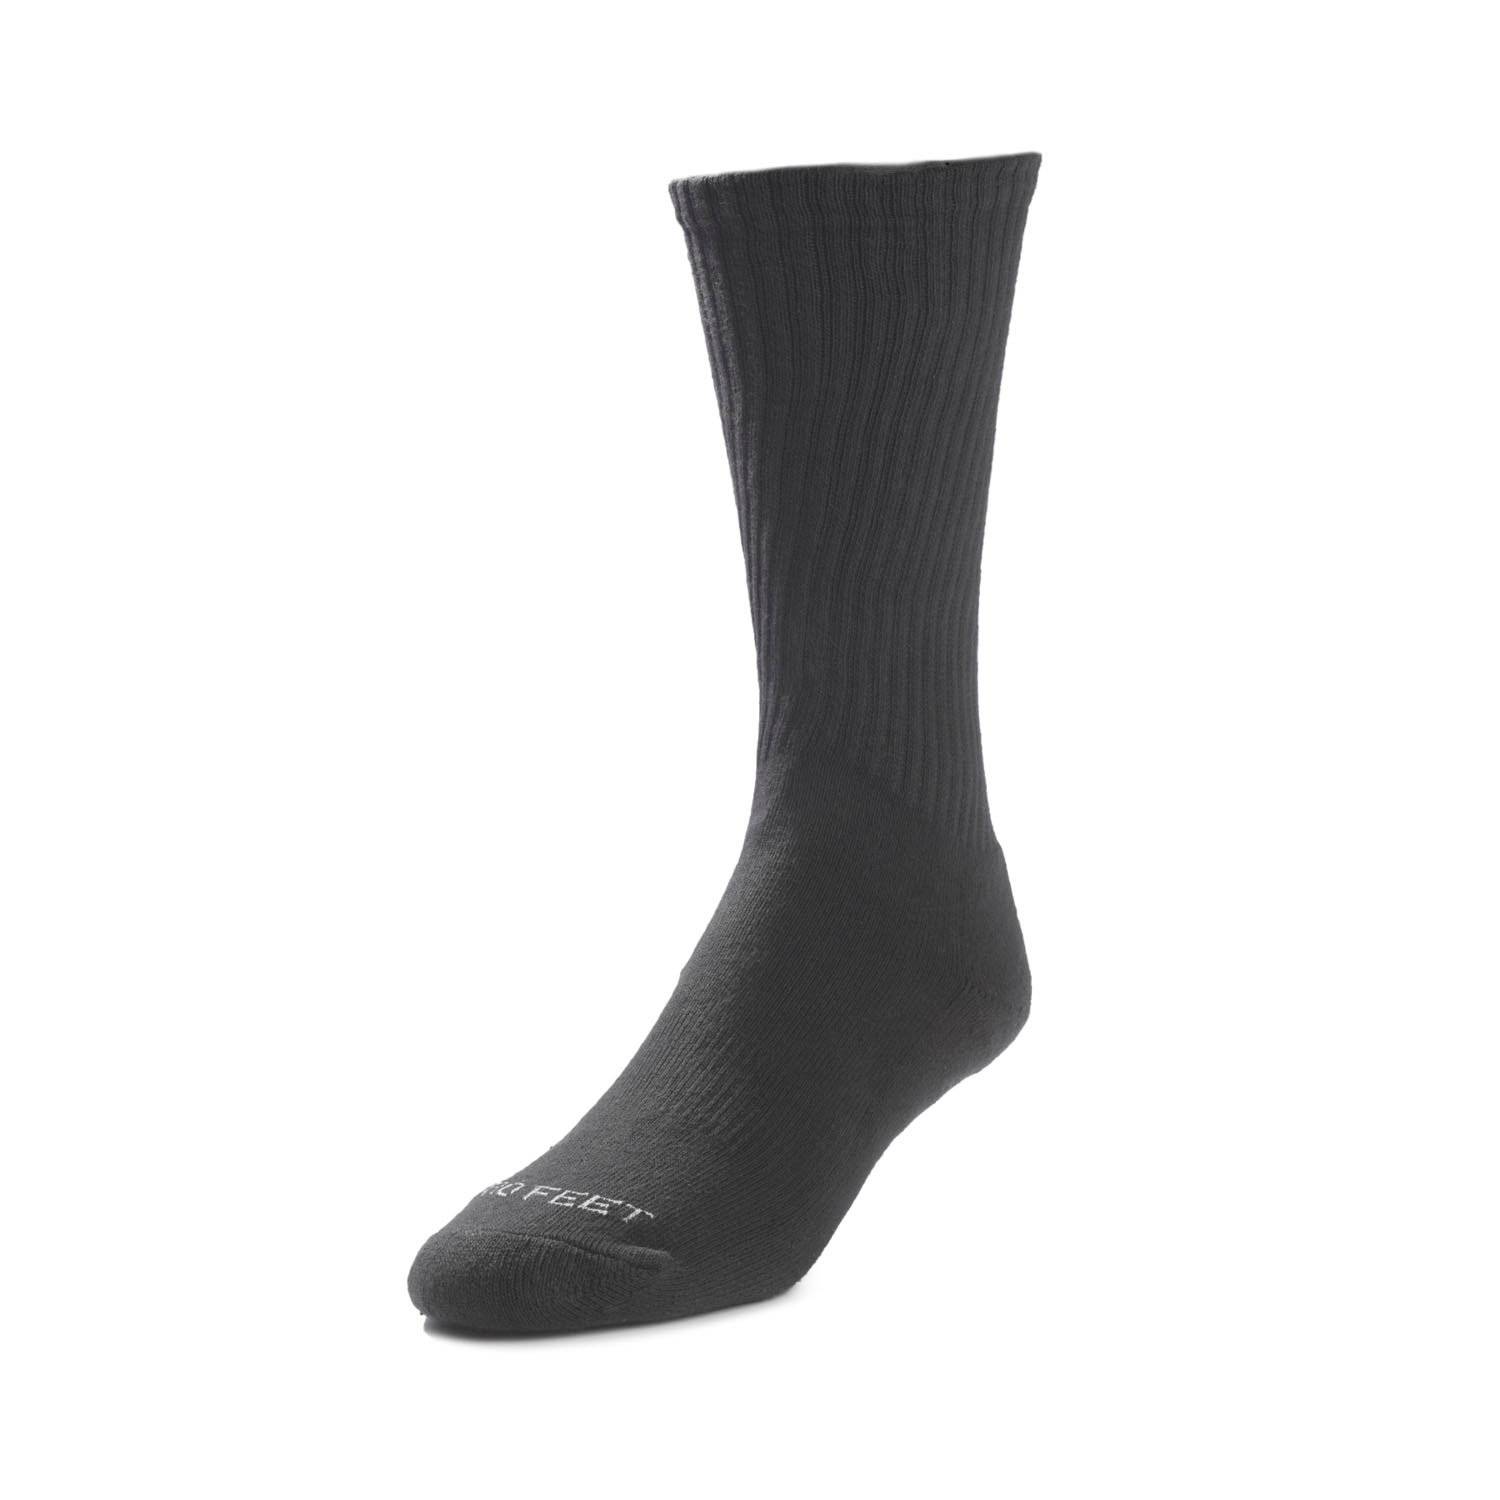 Pro Feet Cotton Crew Socks (3 Pack)